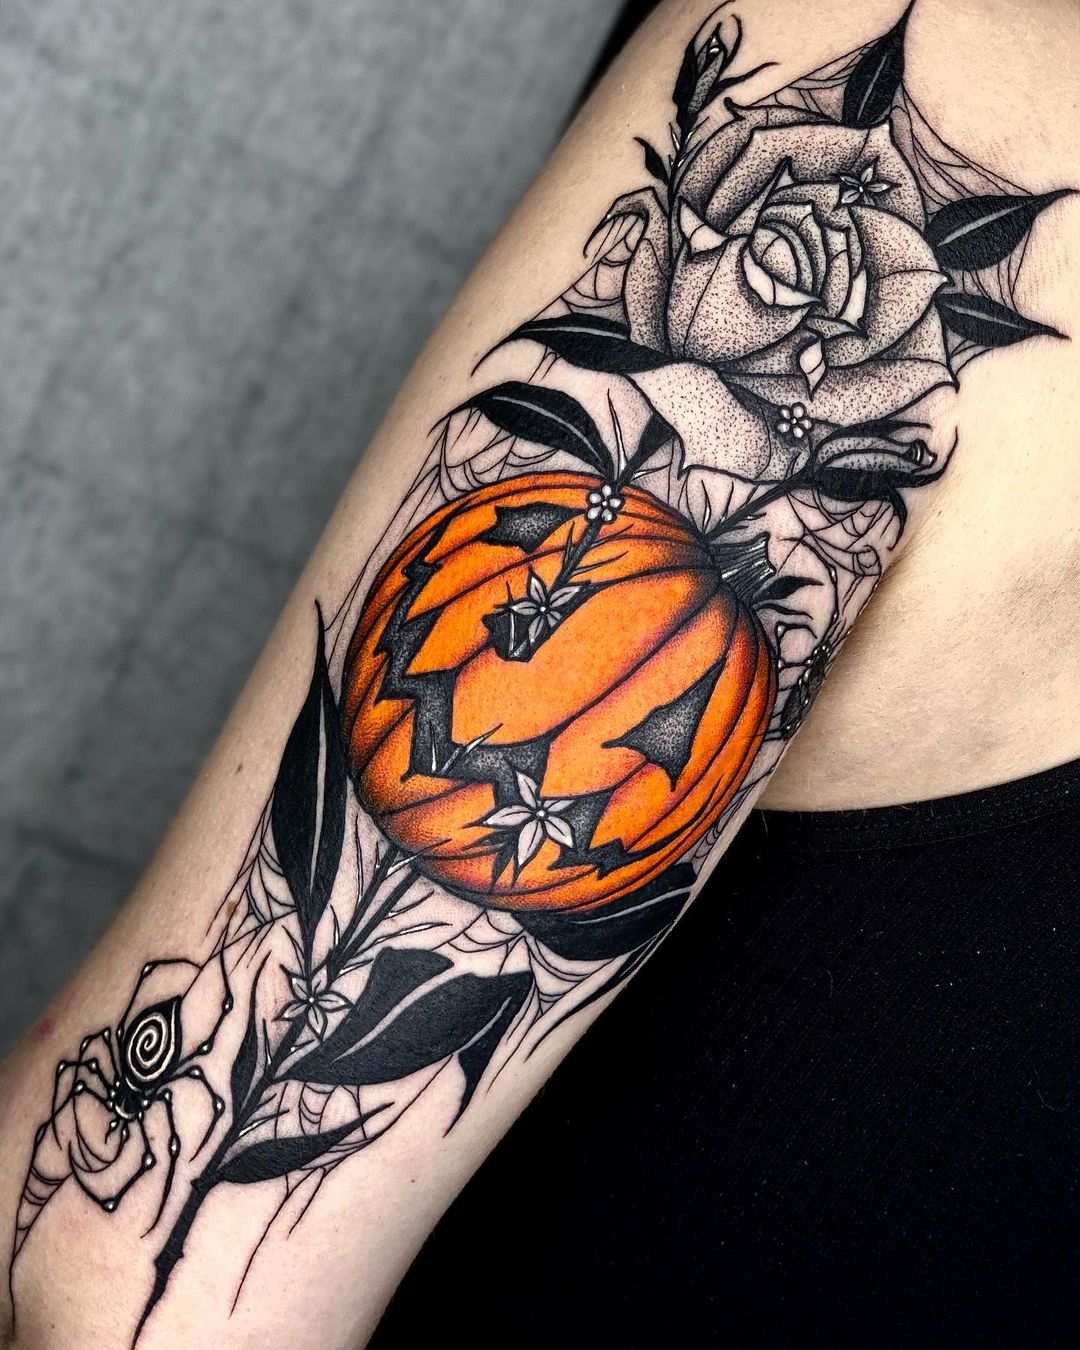 25 Cute Pumpkin Tattoos